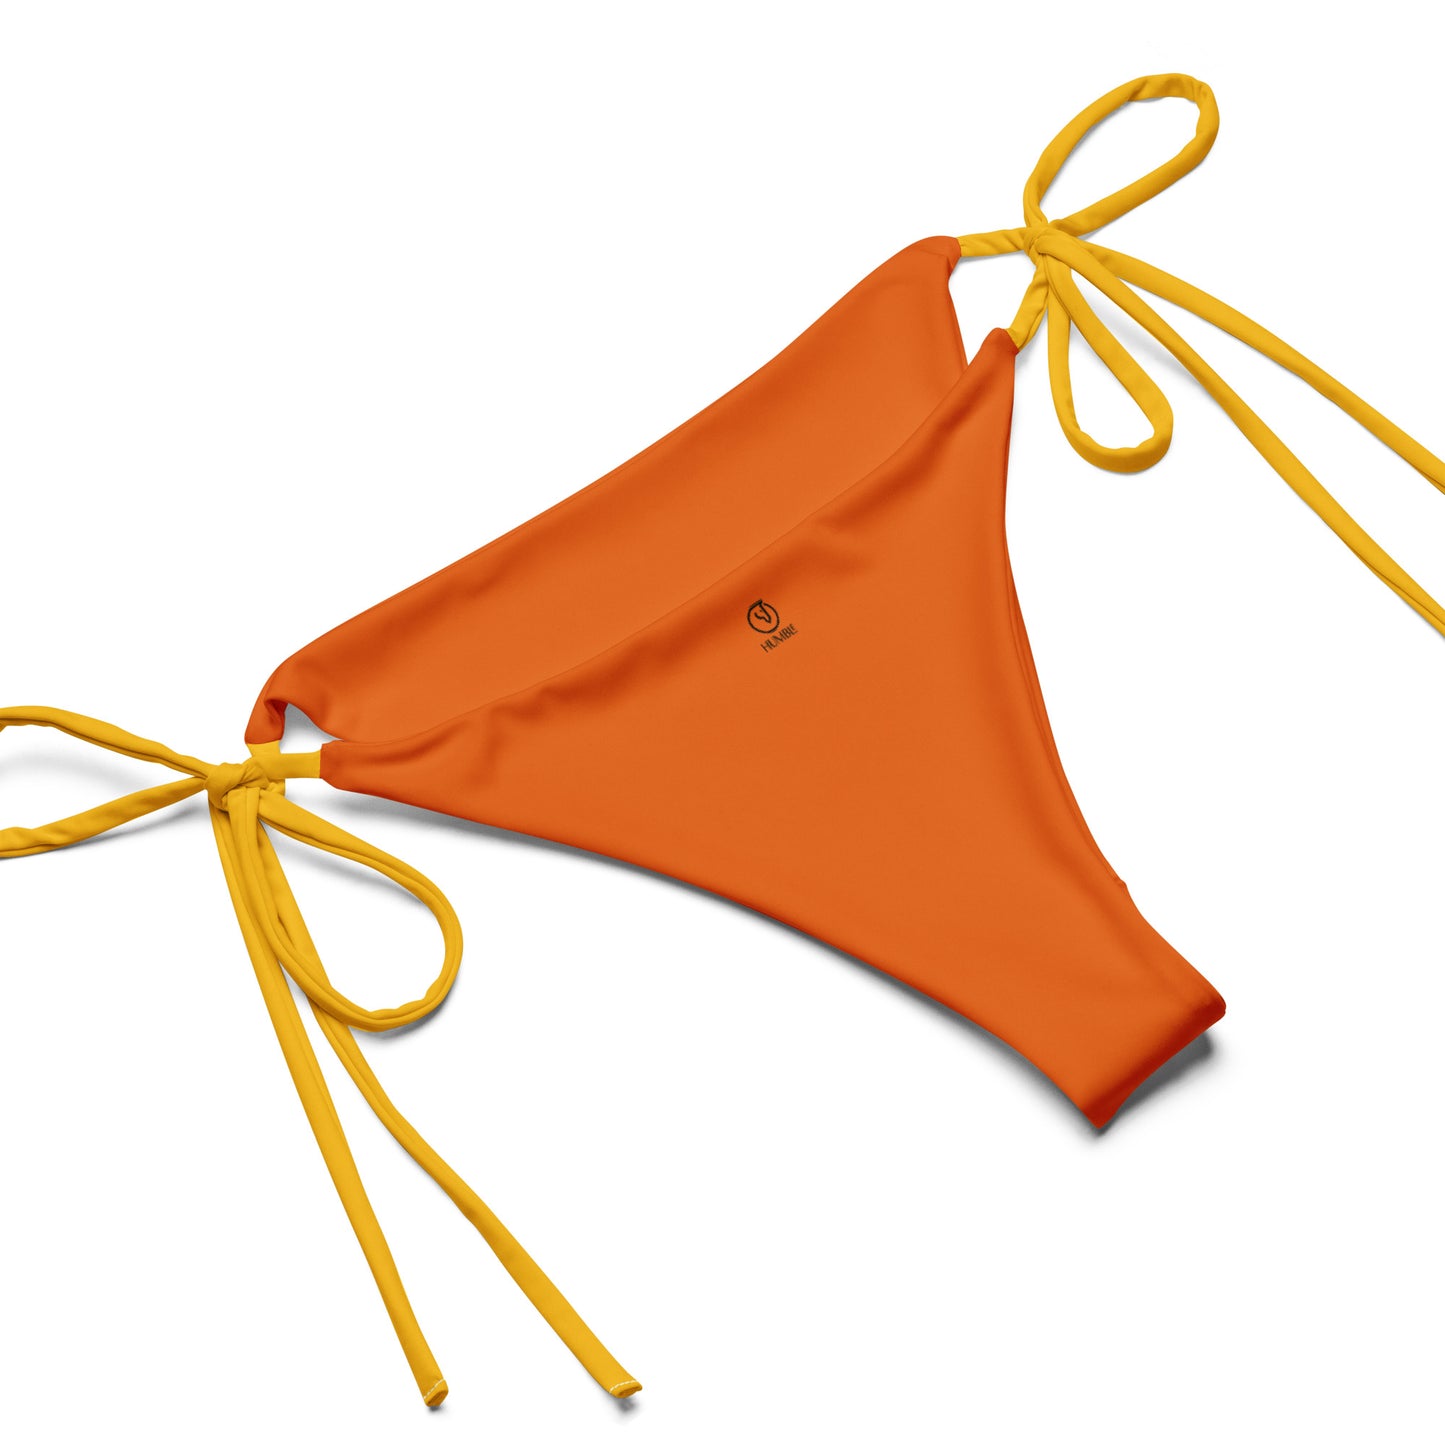 Humble Sportswear, women's two-piece Color Match orange yellow string bikini set 